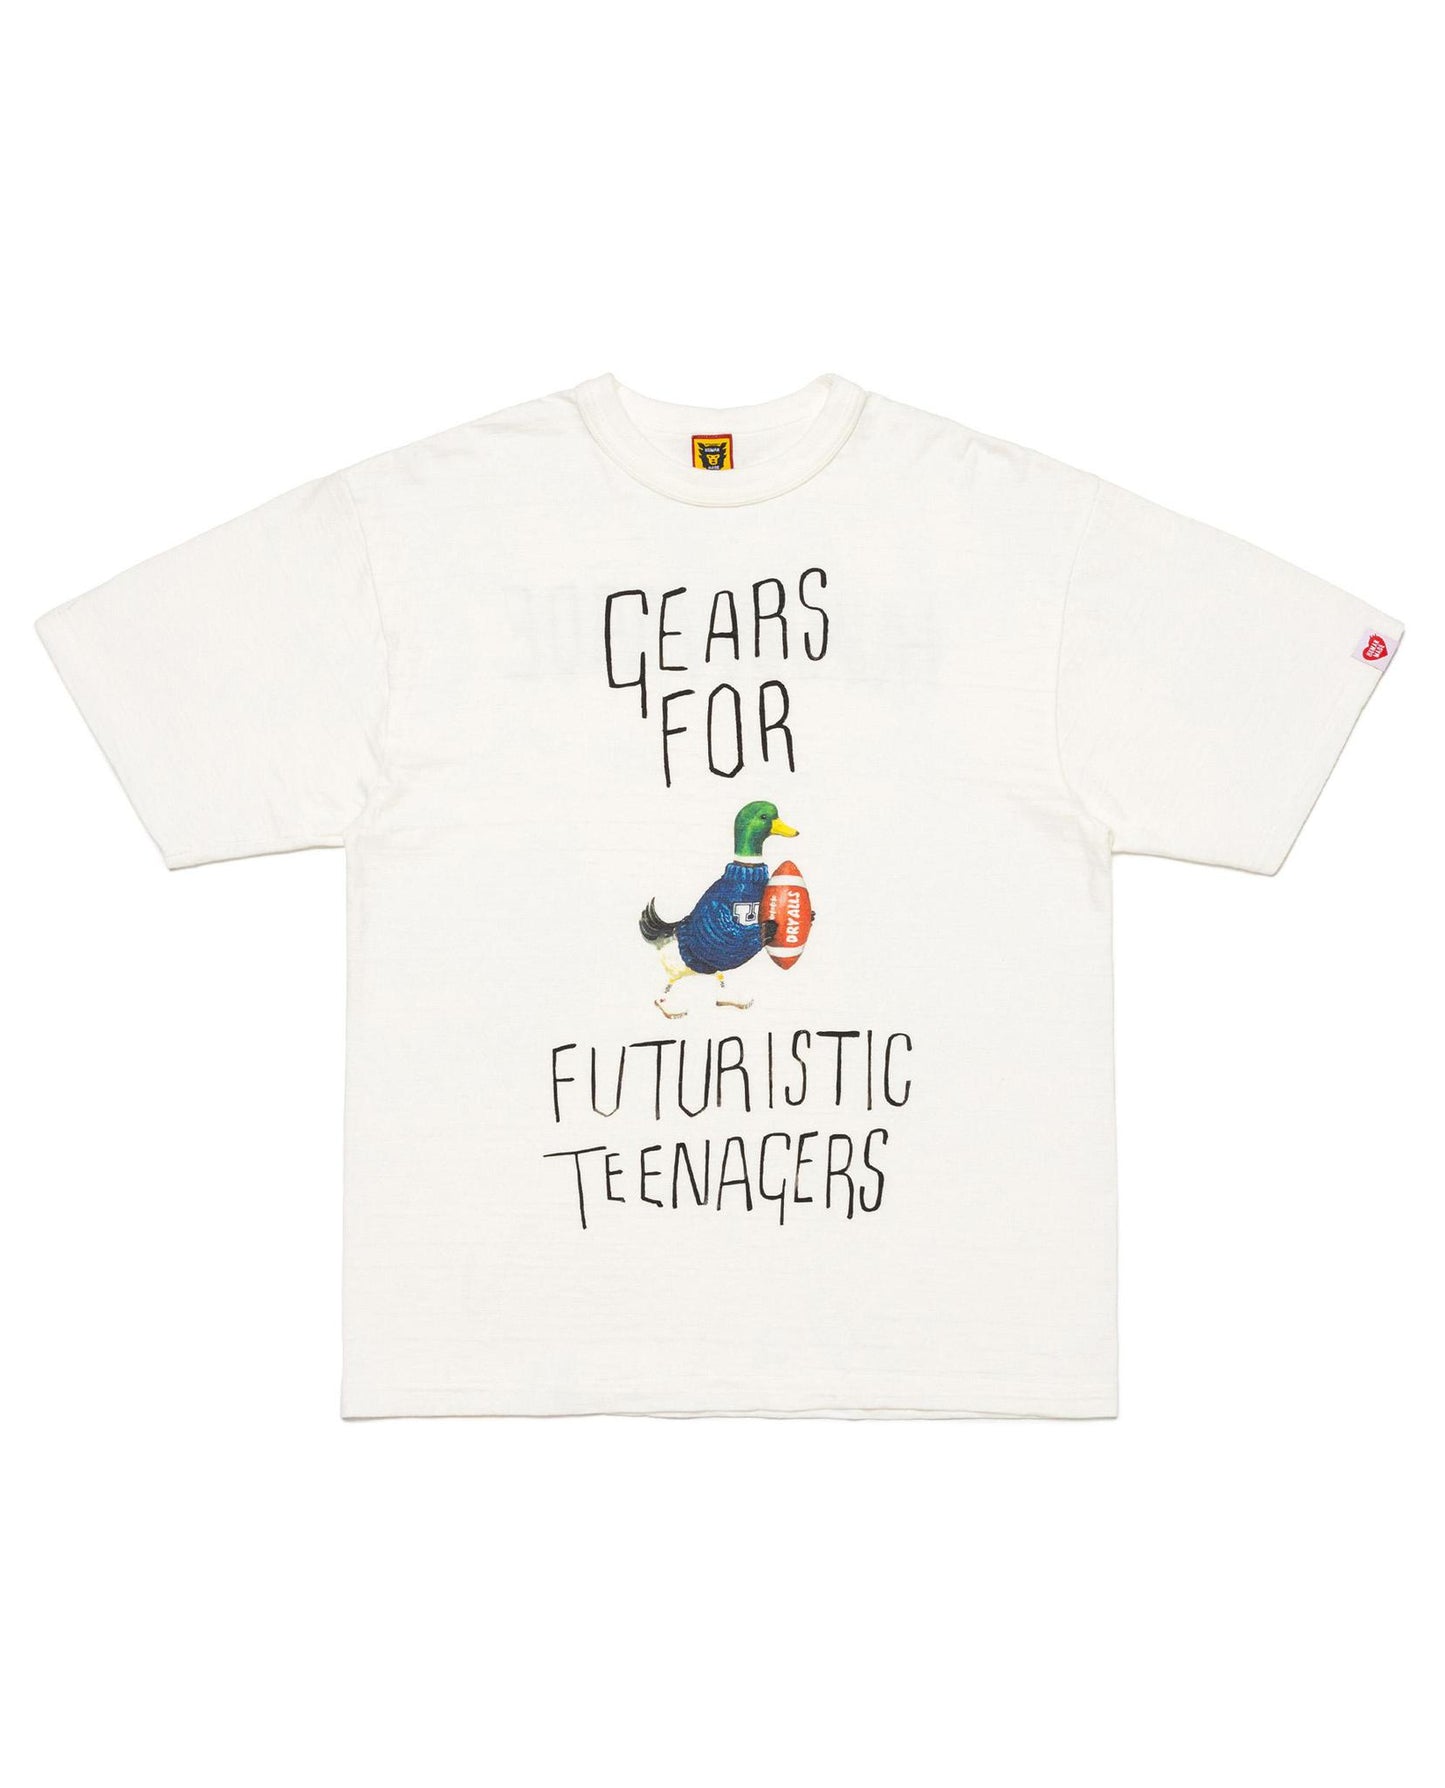 Human Made Graphic T-Shirt #2 | STASHED